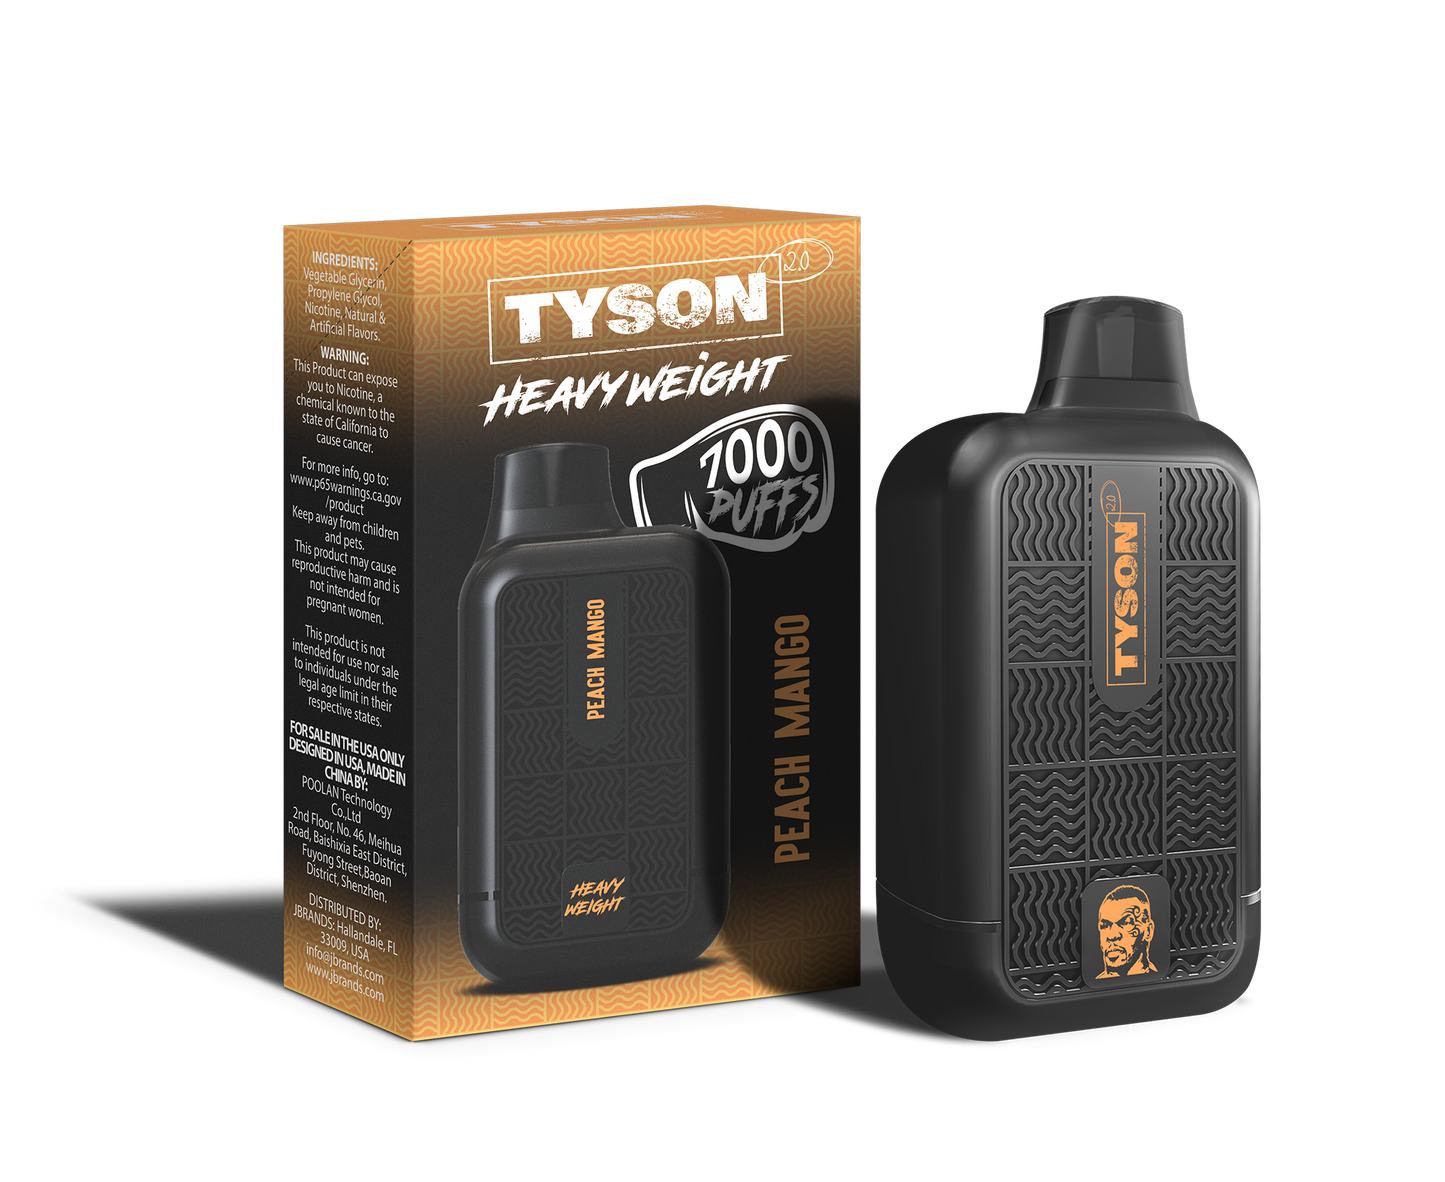 Tyson 2.0 Heavyweight 7000 Puffs Disposable Vape - Peach Mango